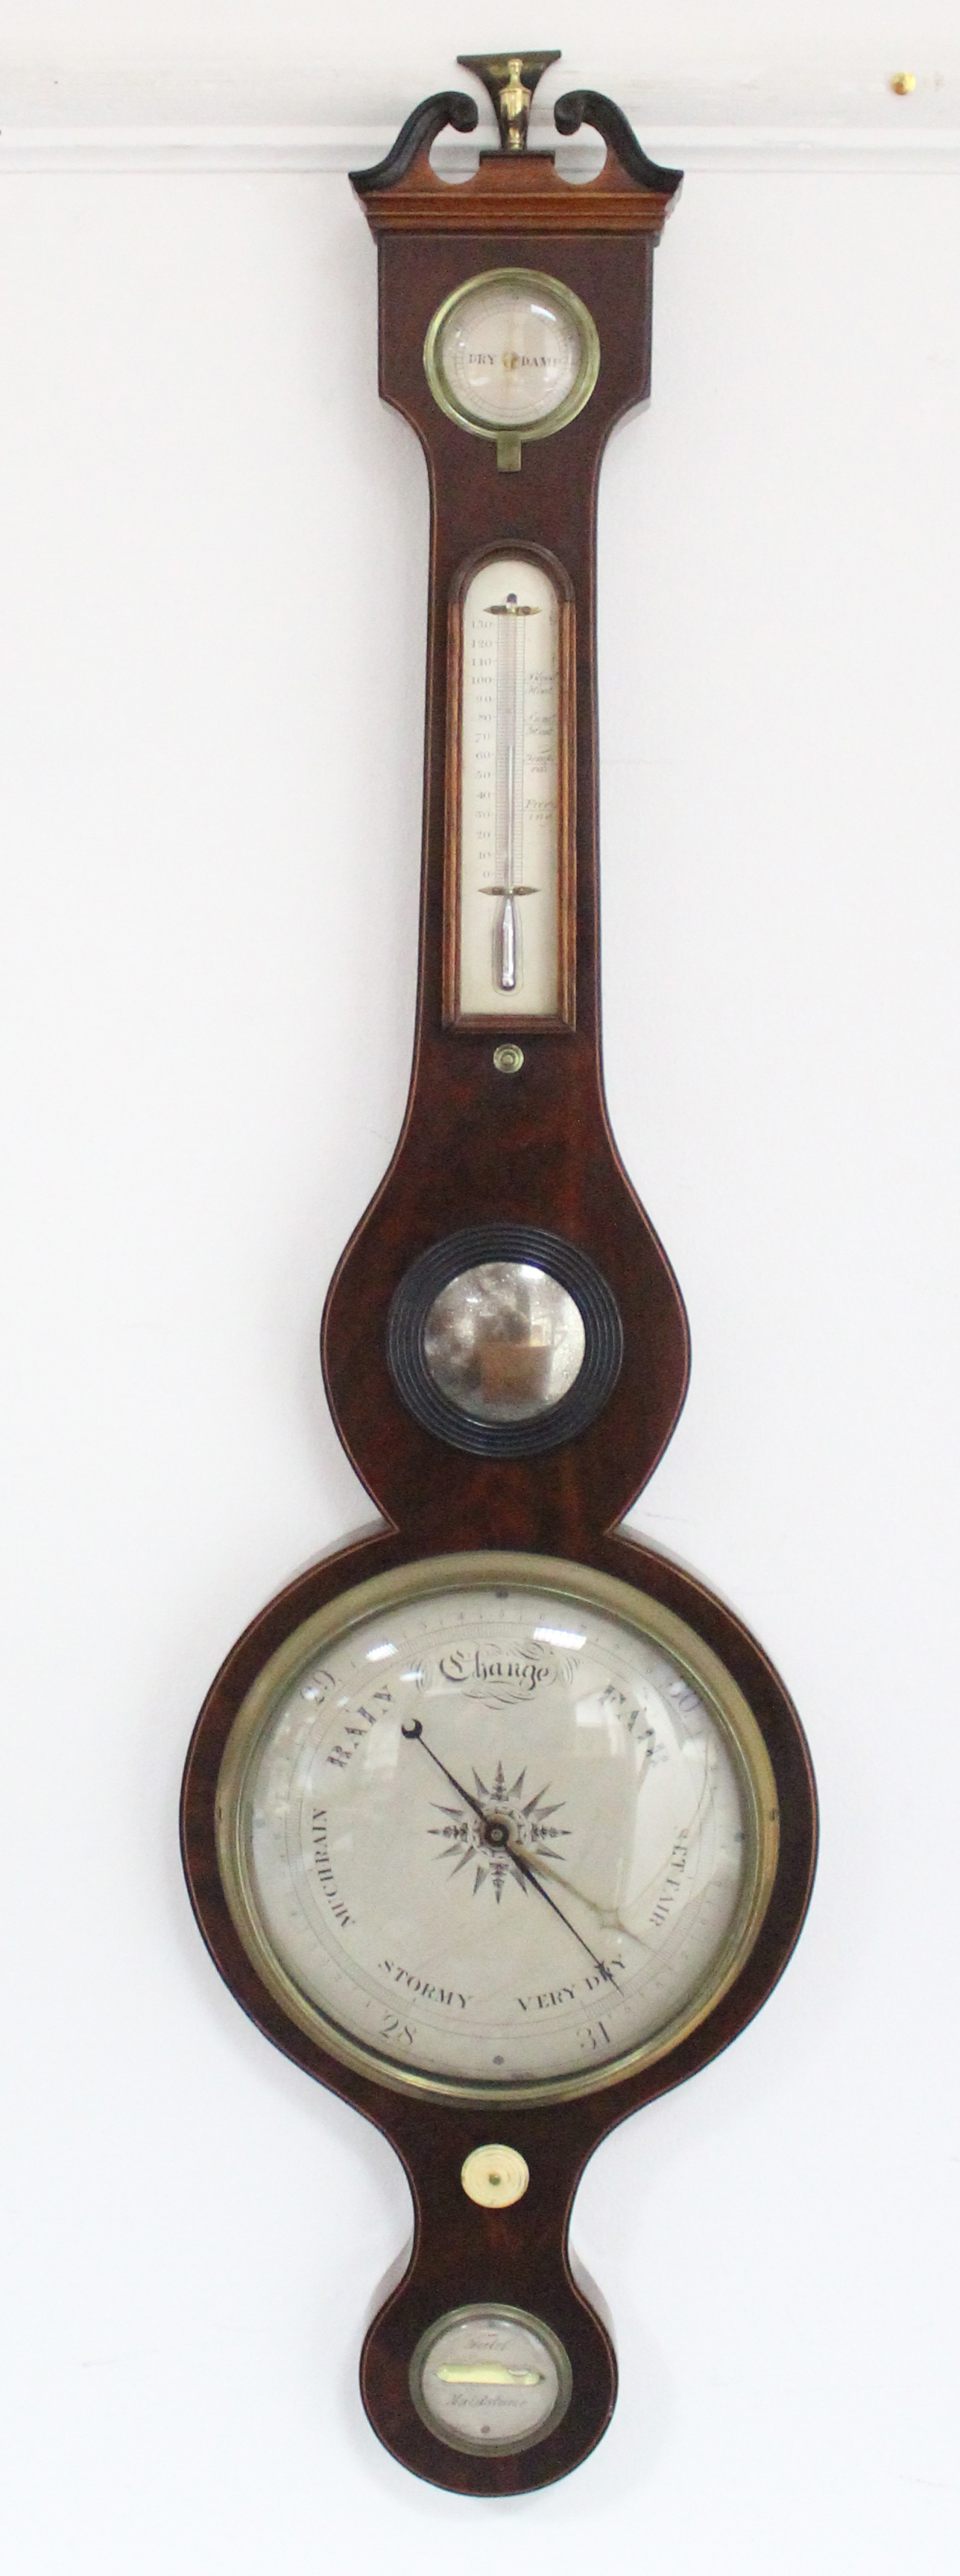 A George III inlaid-mahogany banjo barometer, signed “Tate, Maidstone”, with ivory adjusting knob,